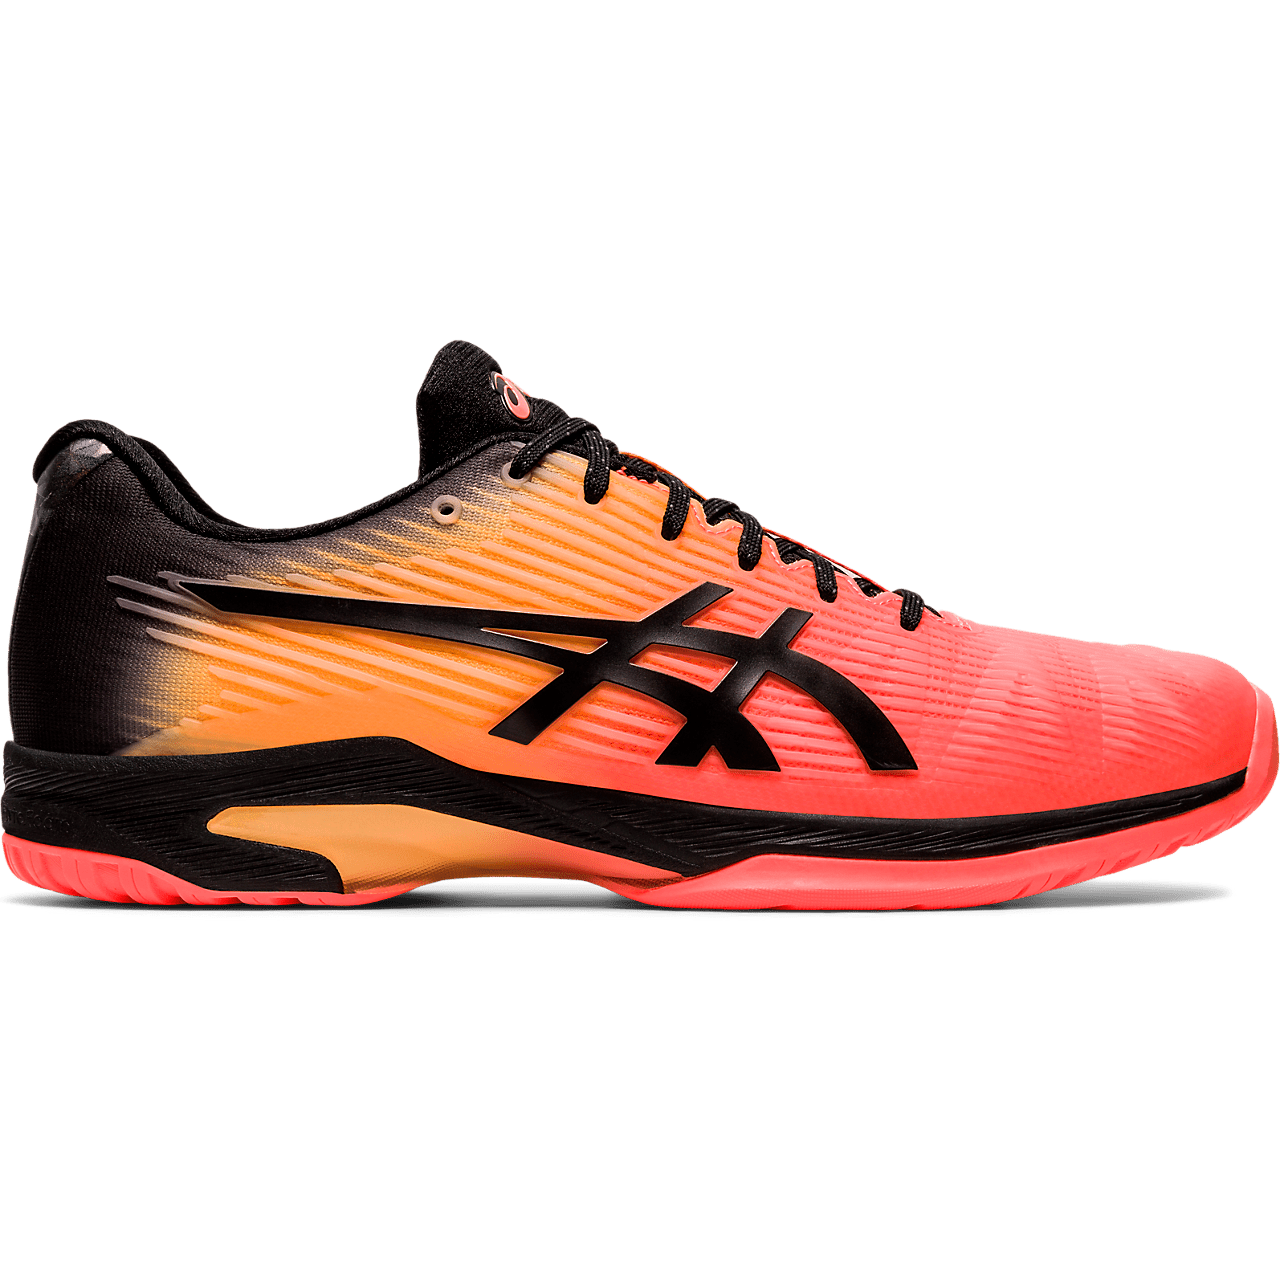 asics orange tennis shoes